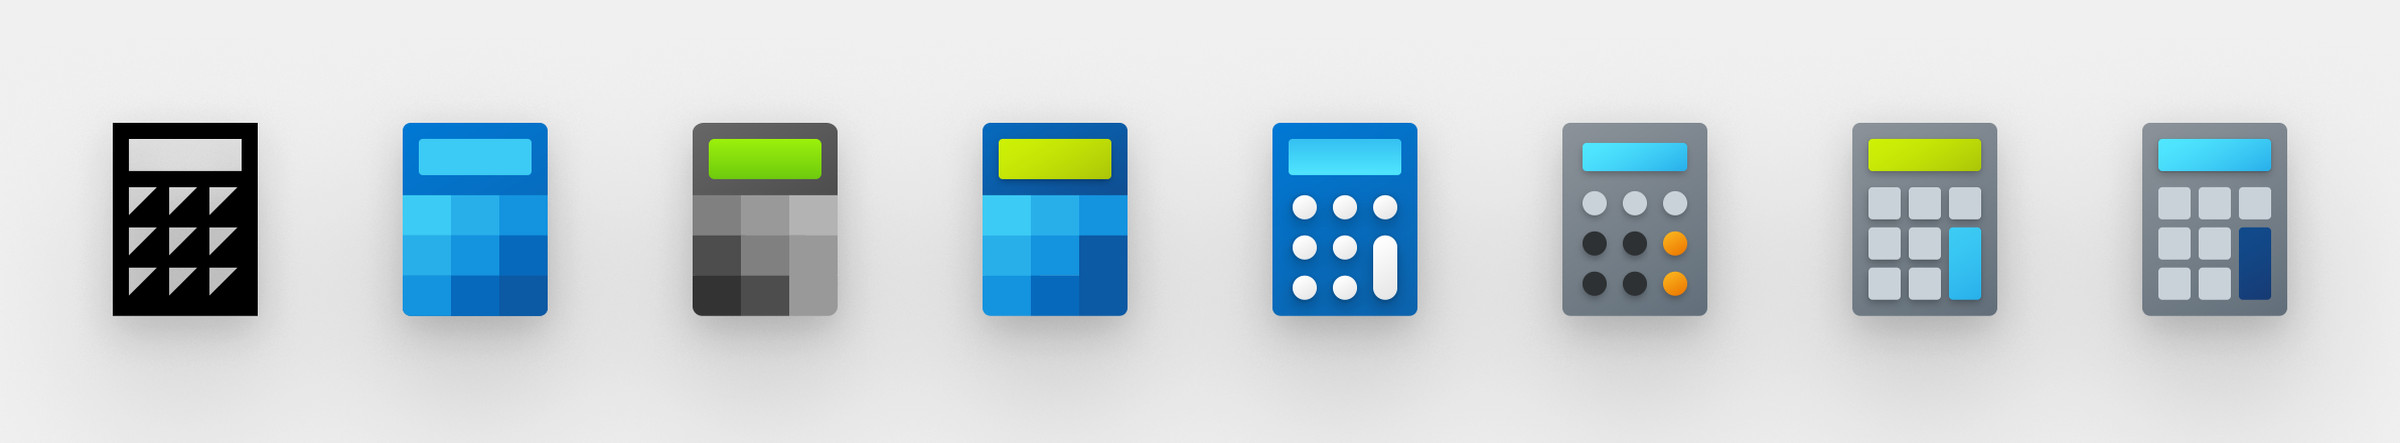 The evolution of the new calculator icon.